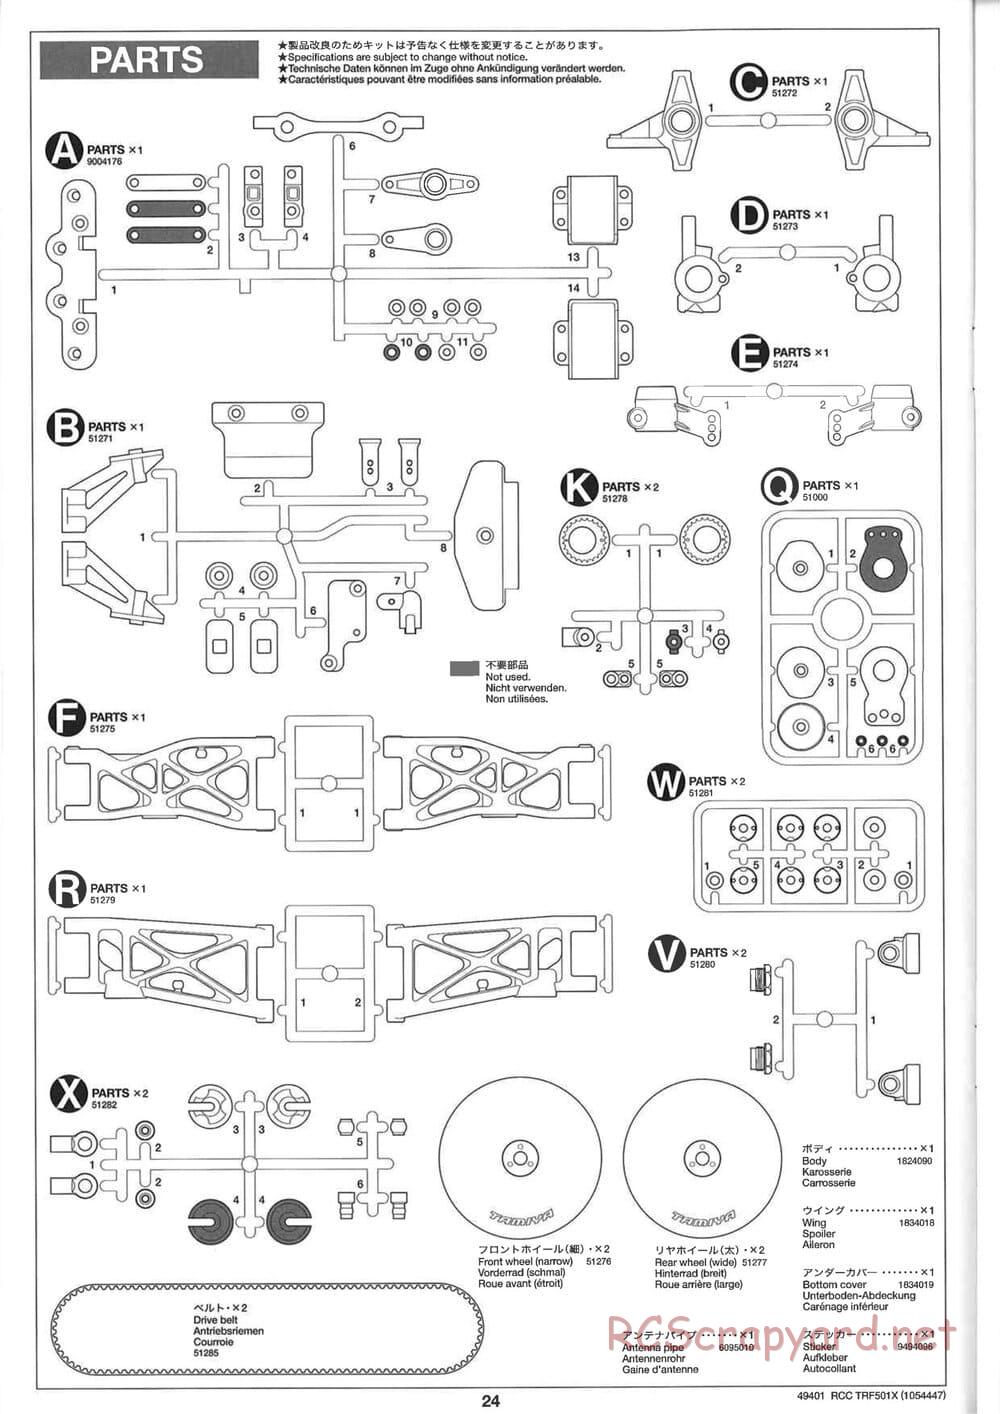 Tamiya - TRF501X Chassis - Manual - Page 24